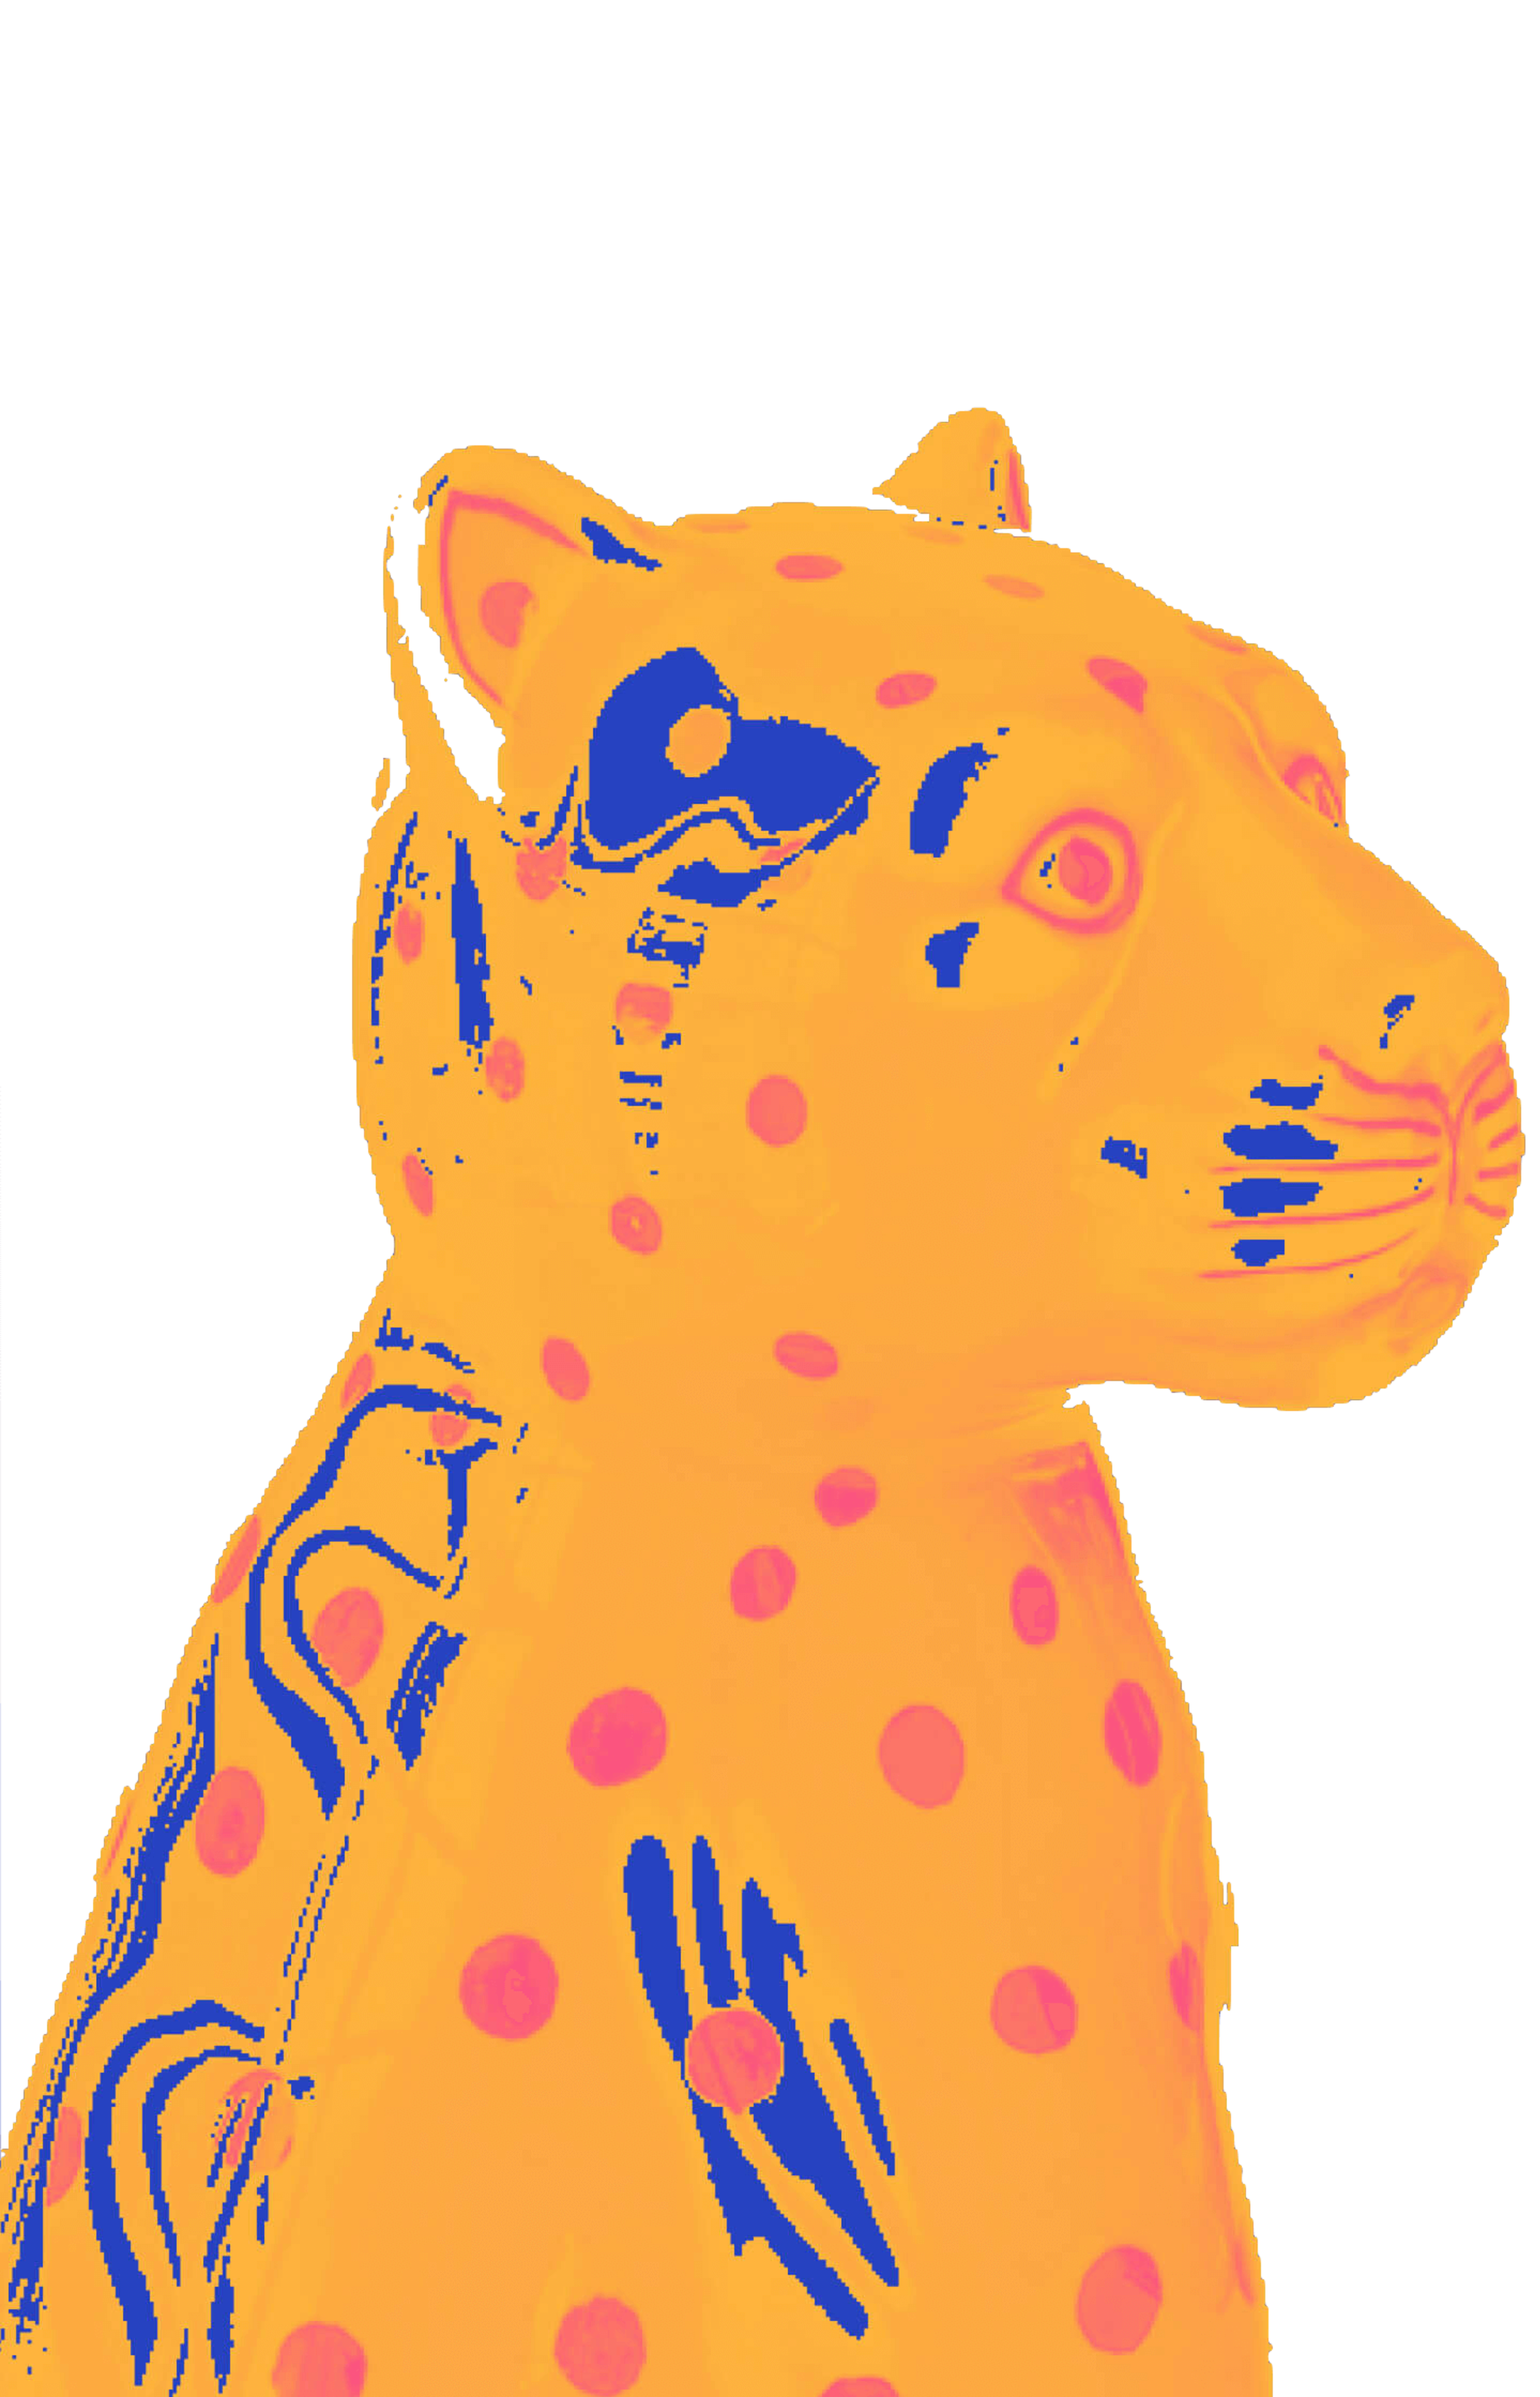 A duotone image of a jaguar on a transparent background